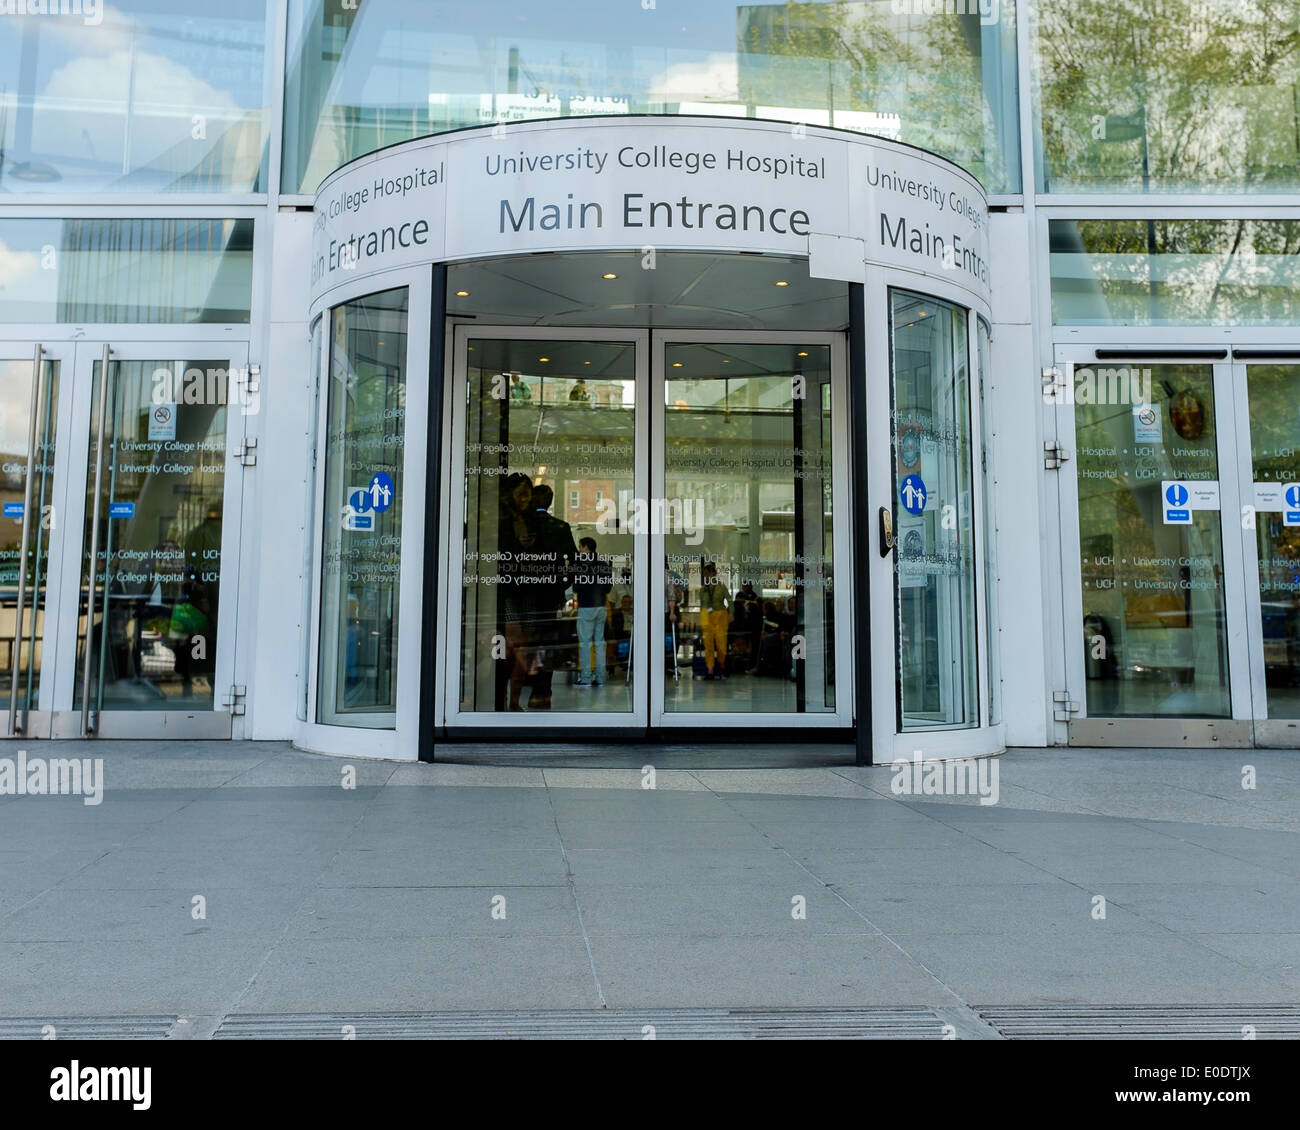 L'ingresso principale al University College Hospital su Euston Road, porte scorrevoli aperte. Londra, Inghilterra. Foto Stock